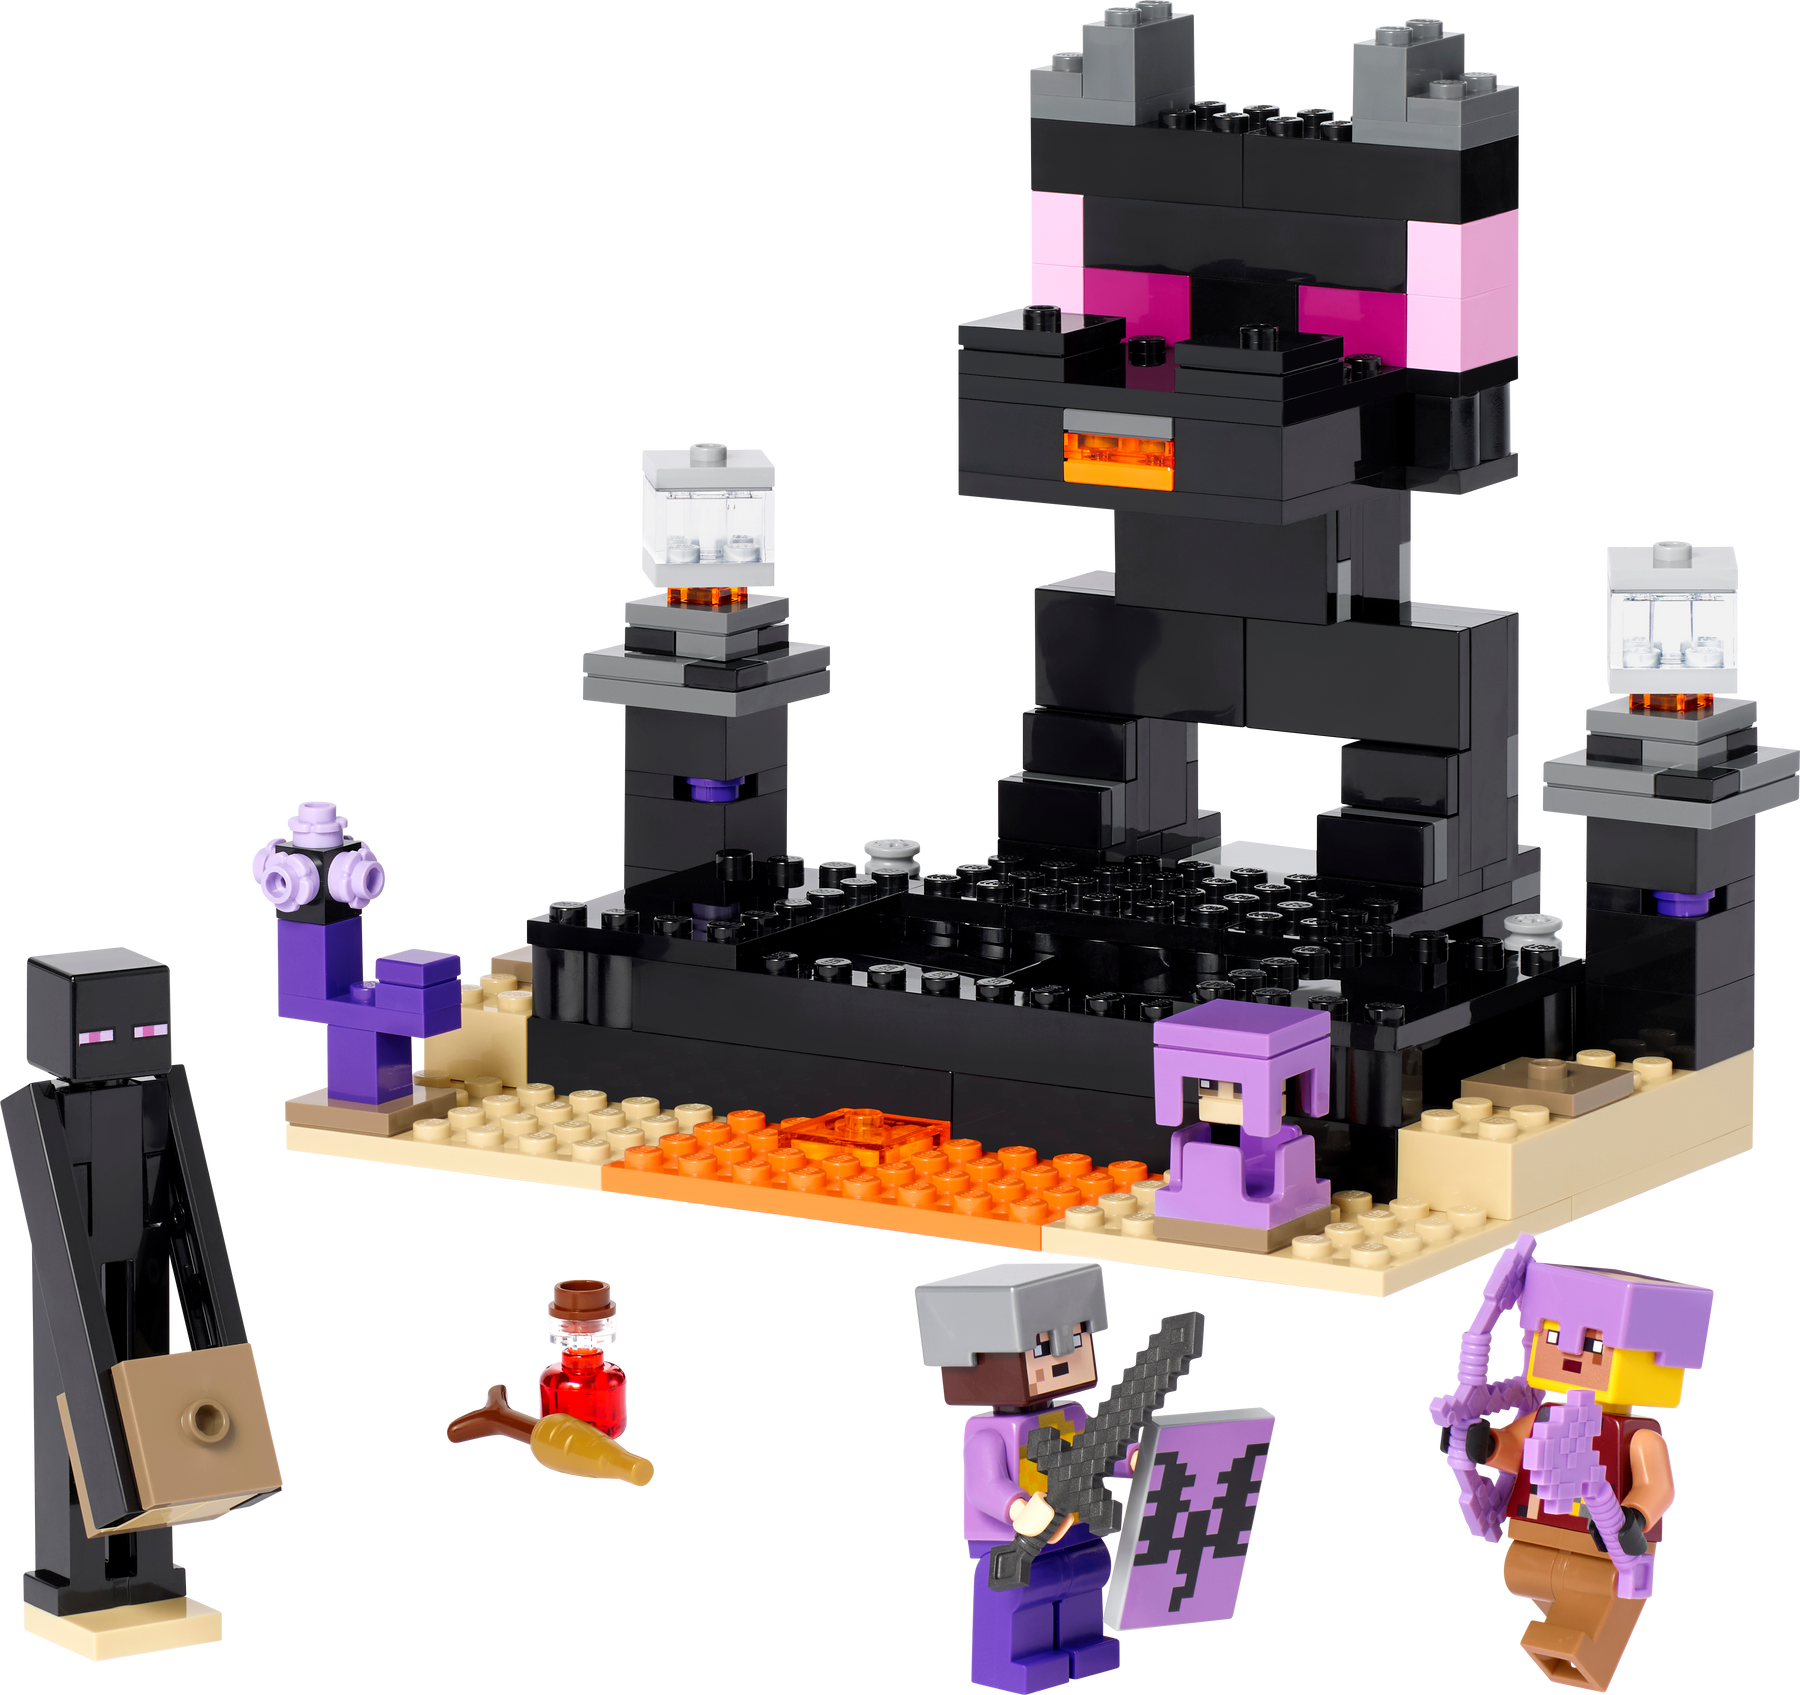 Blaze, LEGO Minifigures, Minecraft – Creative Brick Builders